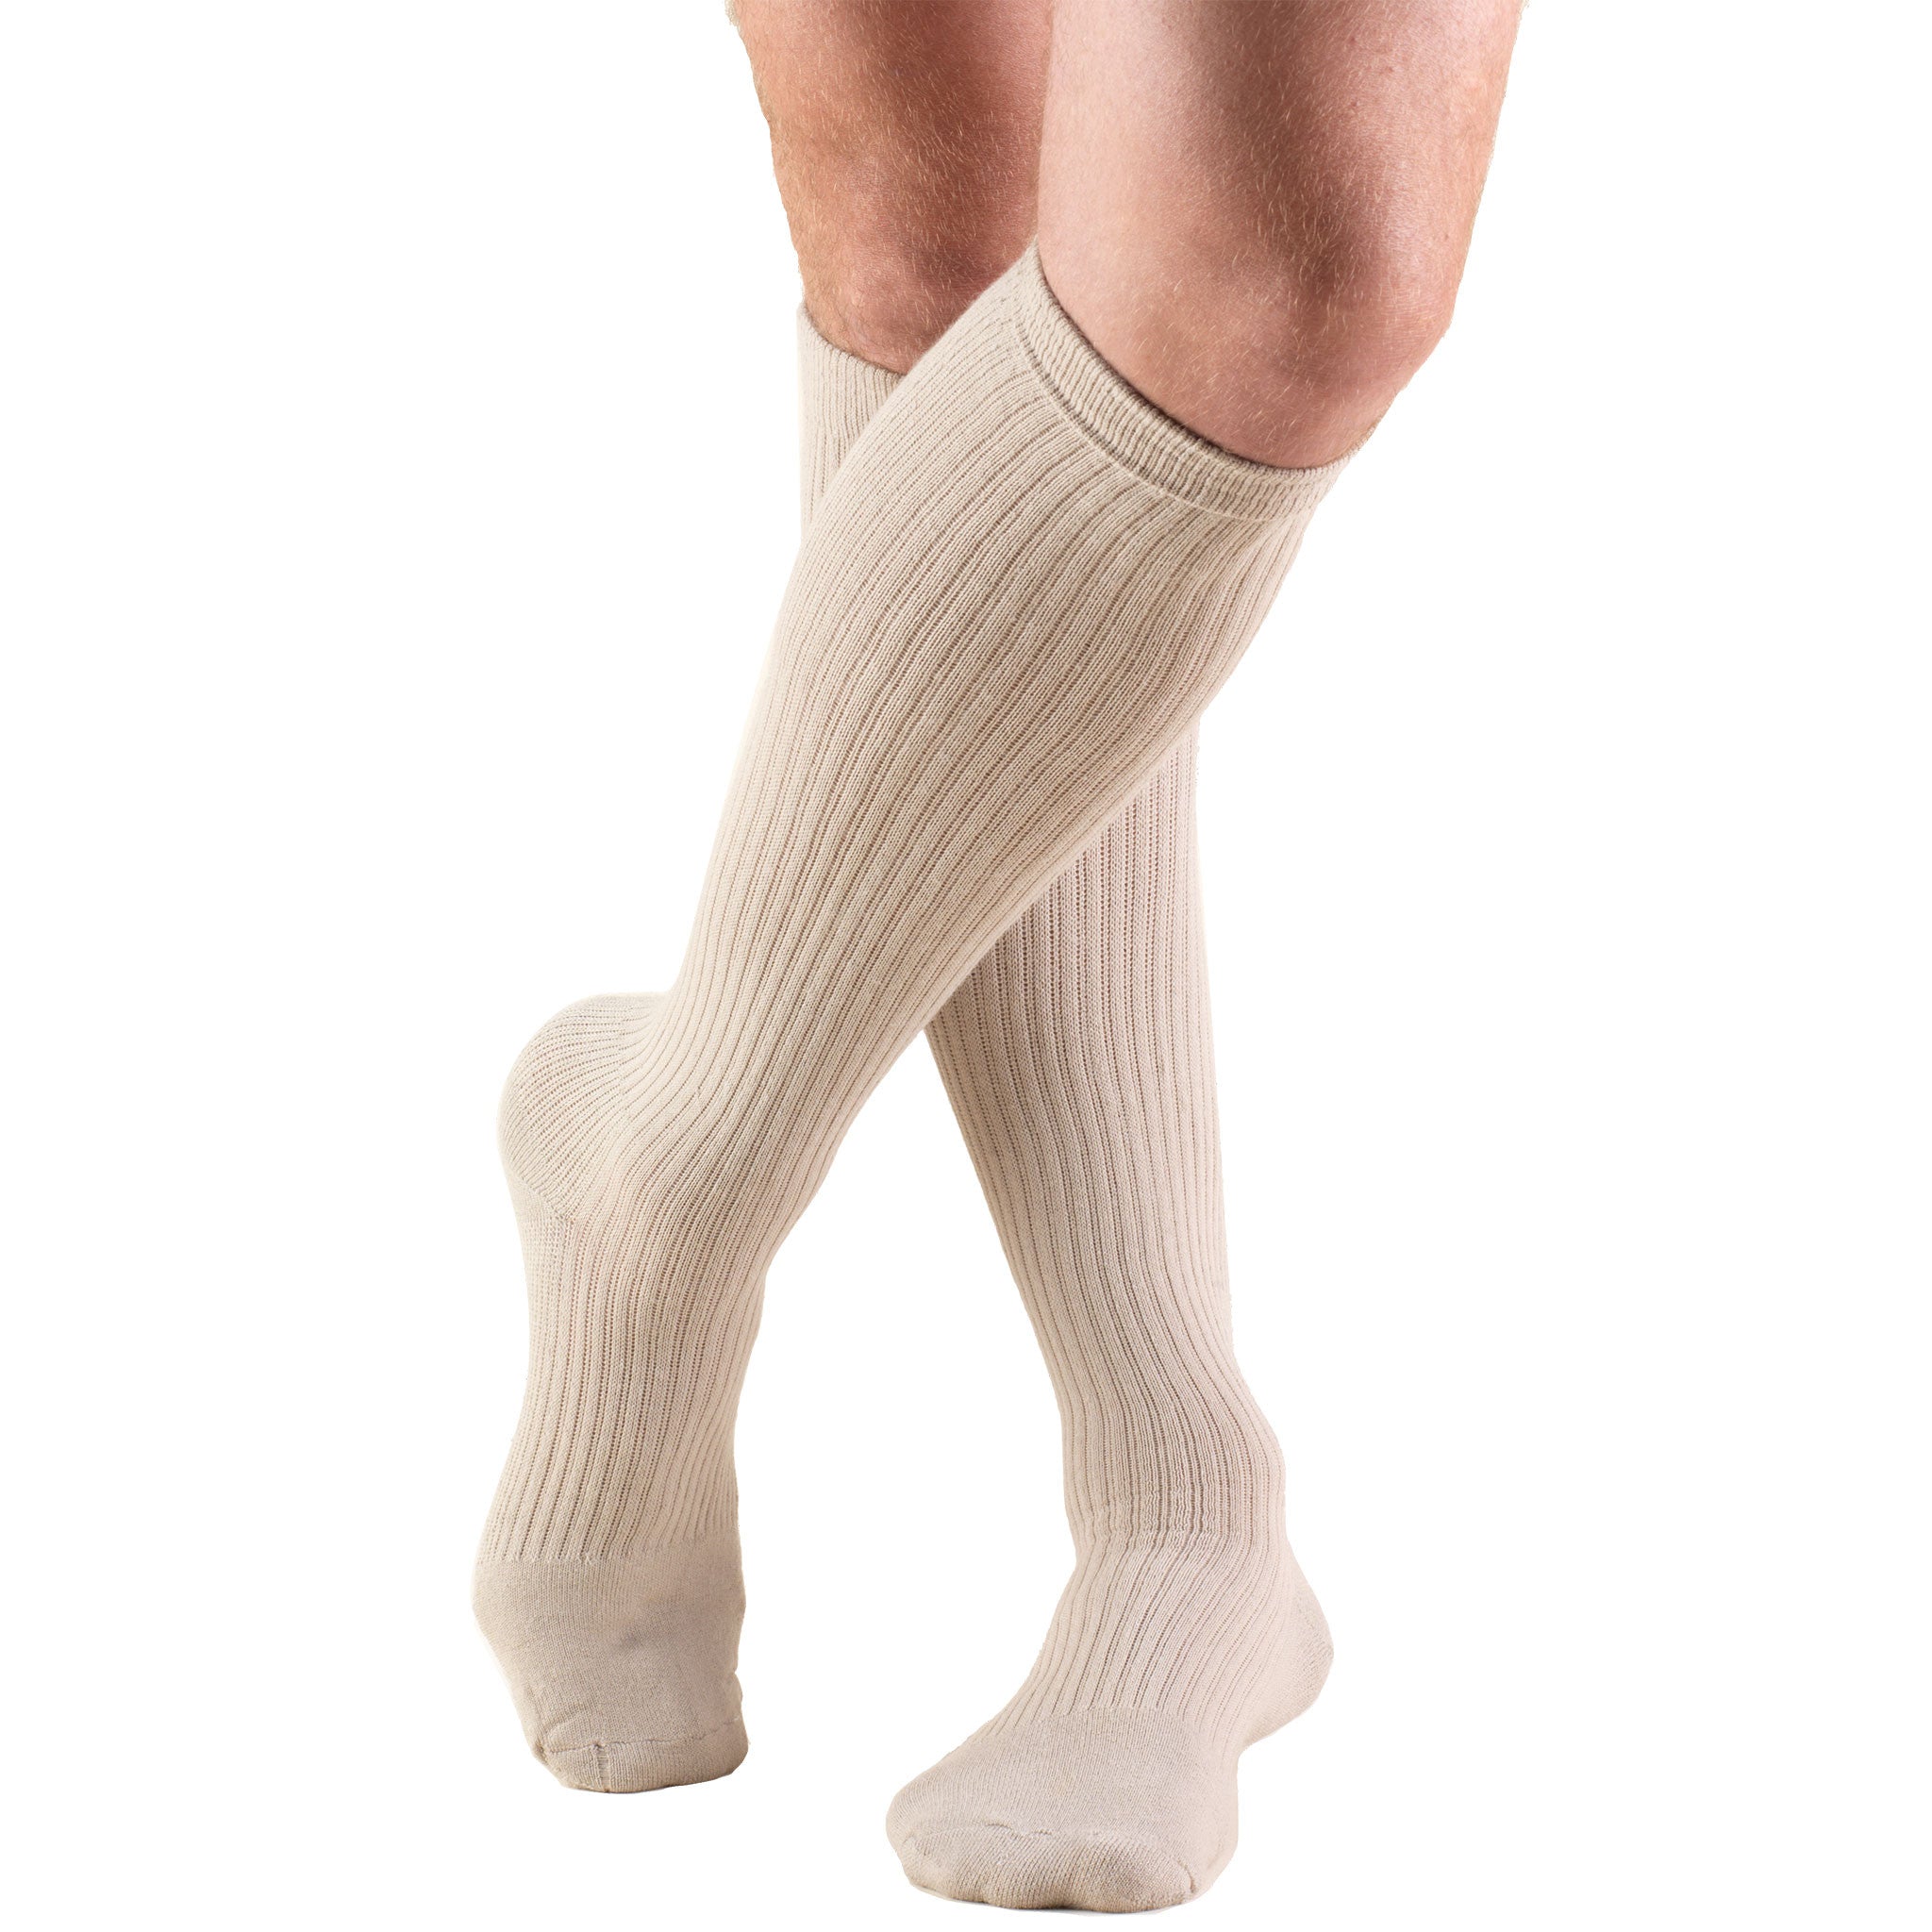  Truform Zipper Compression Stockings, 15-20 mmHg Medical Socks,  Women and Men, Knee High, Open Toe, Beige, Large : Health & Household